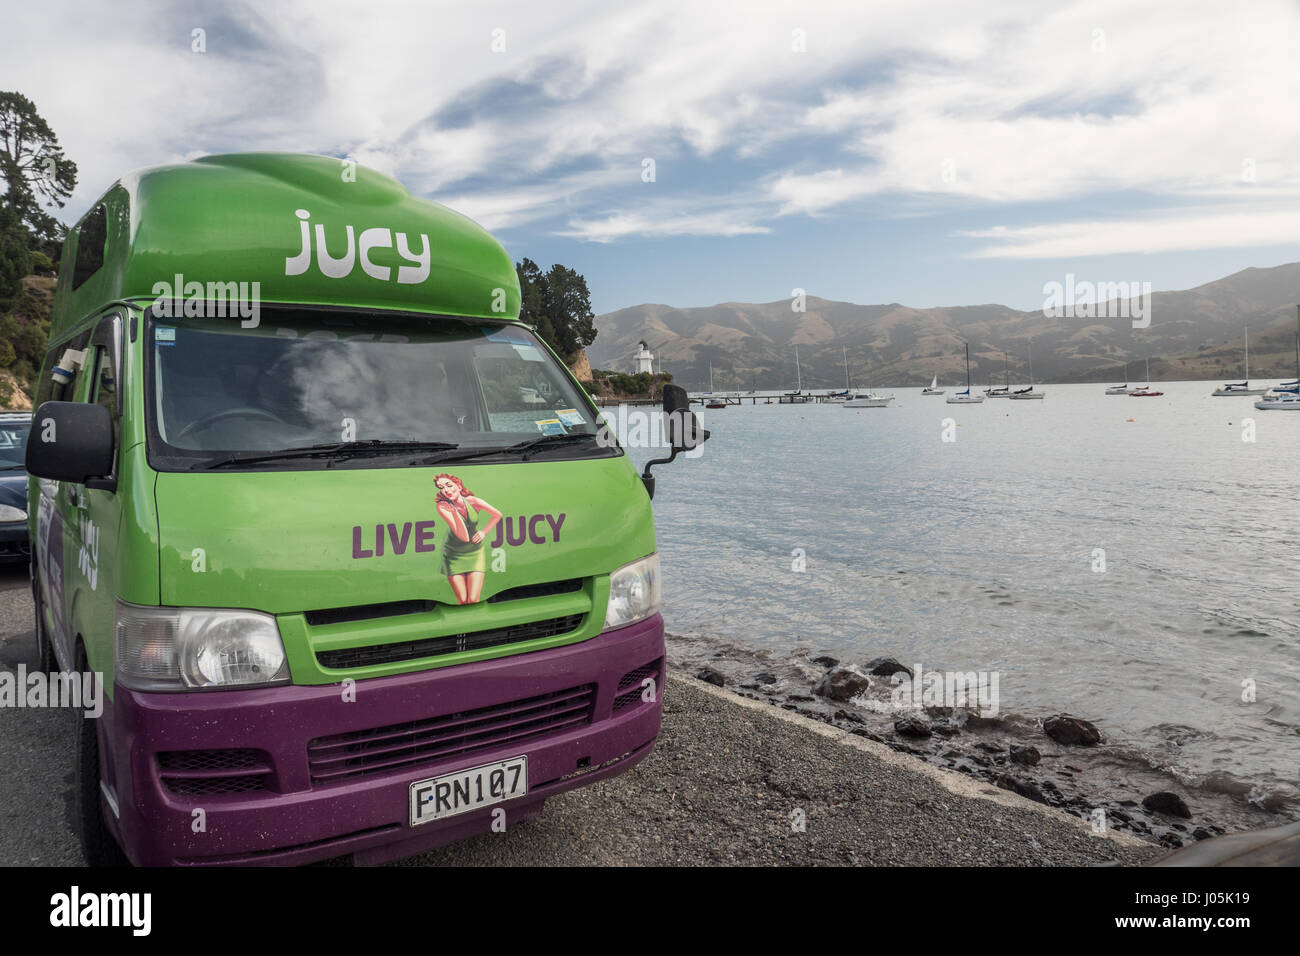 Juicy camper van hi-res stock photography and images - Alamy